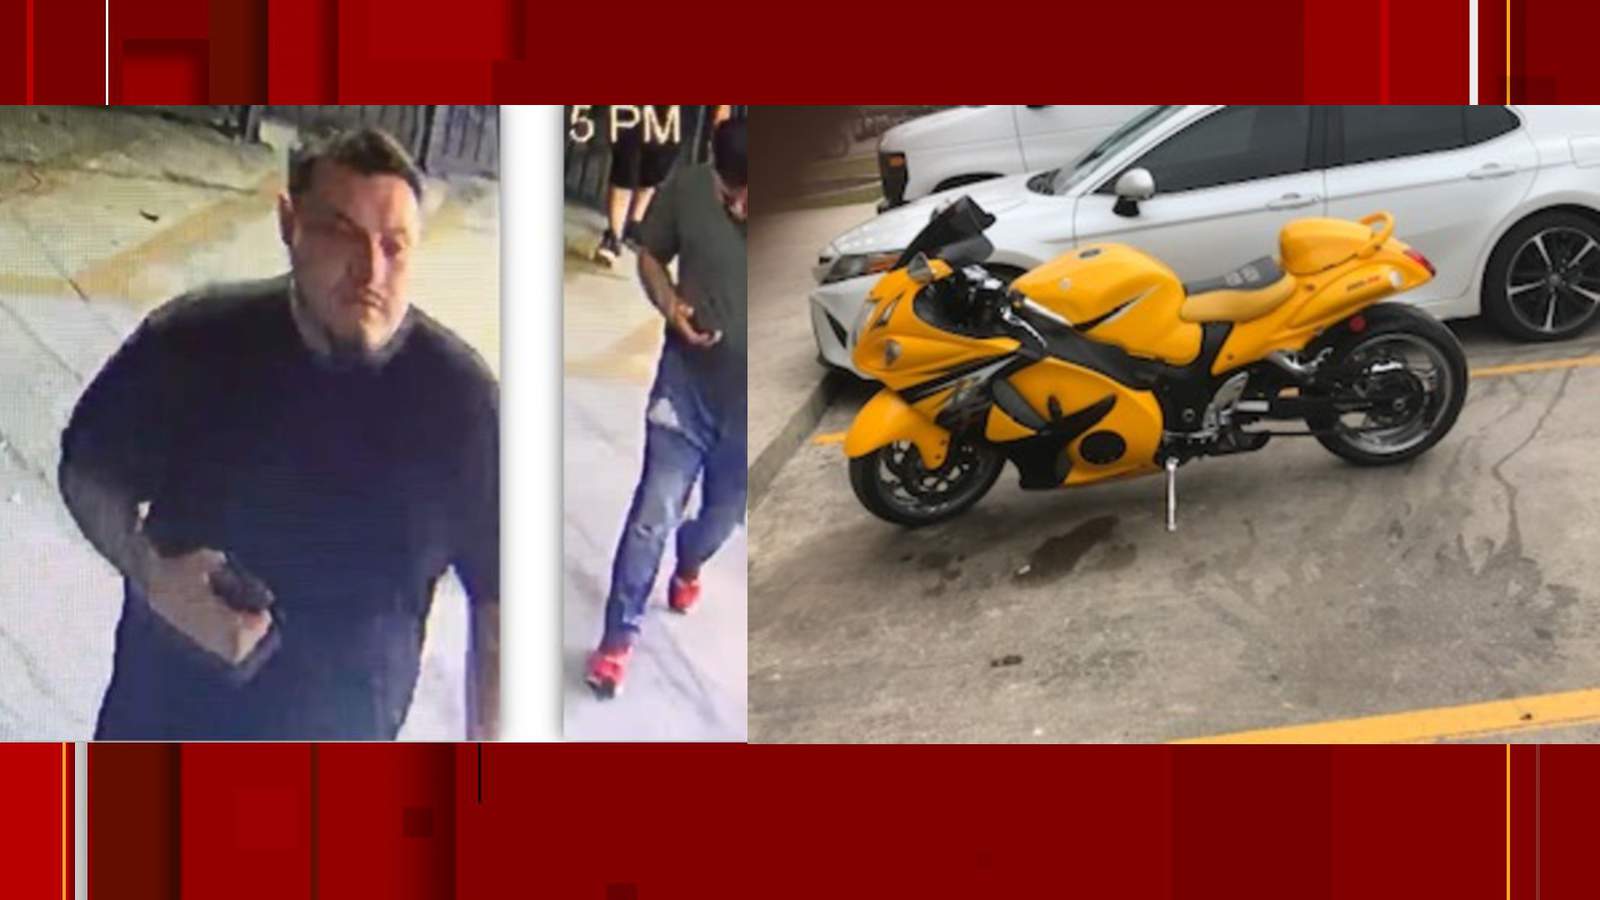 2 men steal motorcycle in broad daylight from San Antonio neighborhood